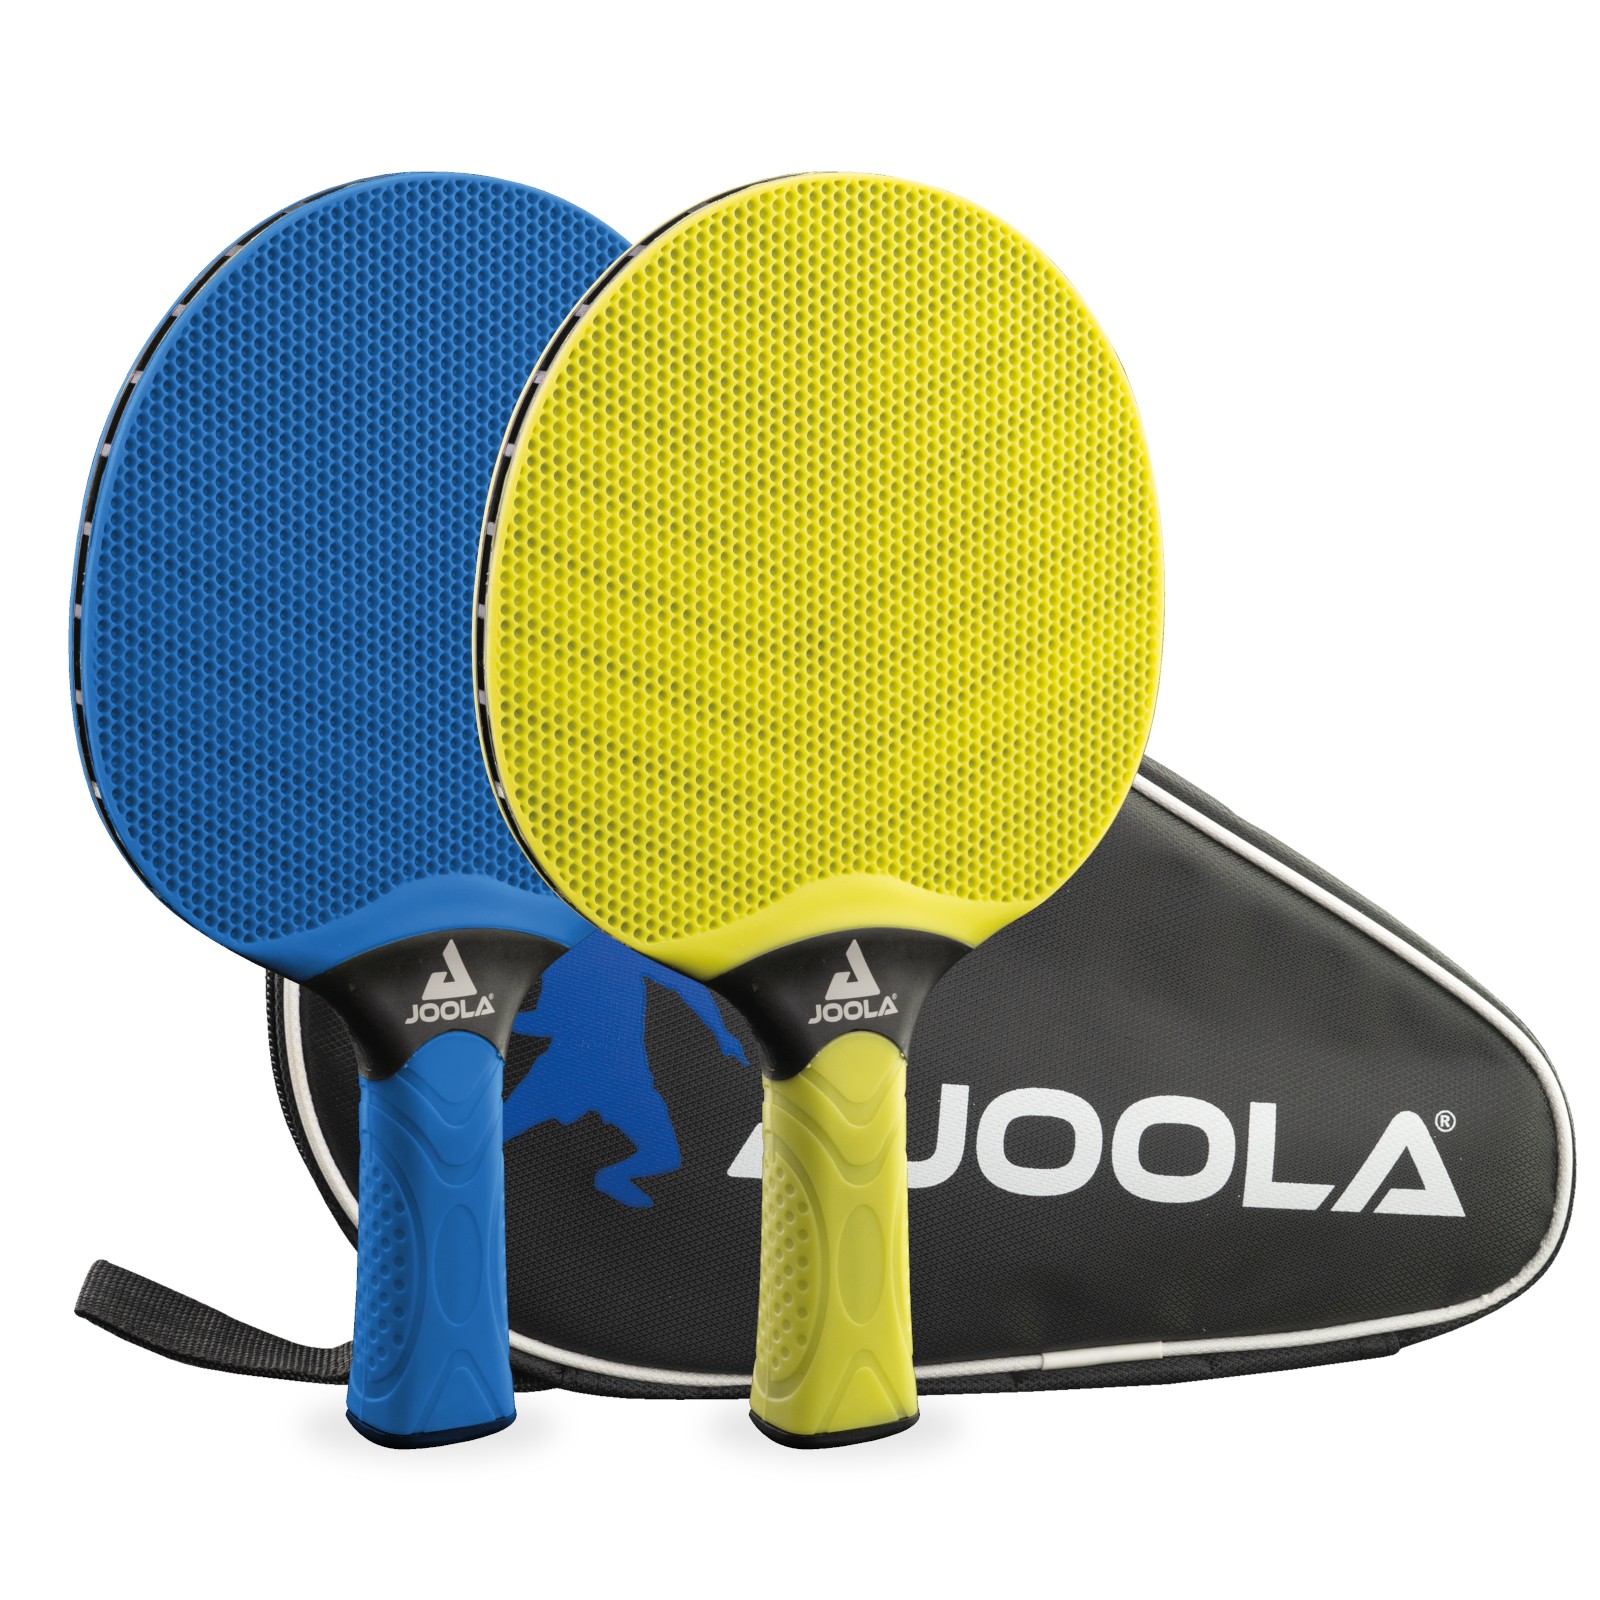 Joola Outdoor Table Tennis Table J500A incl. Accessories Set - Fitshop | Tischtennisschläger & Tischtennisbälle